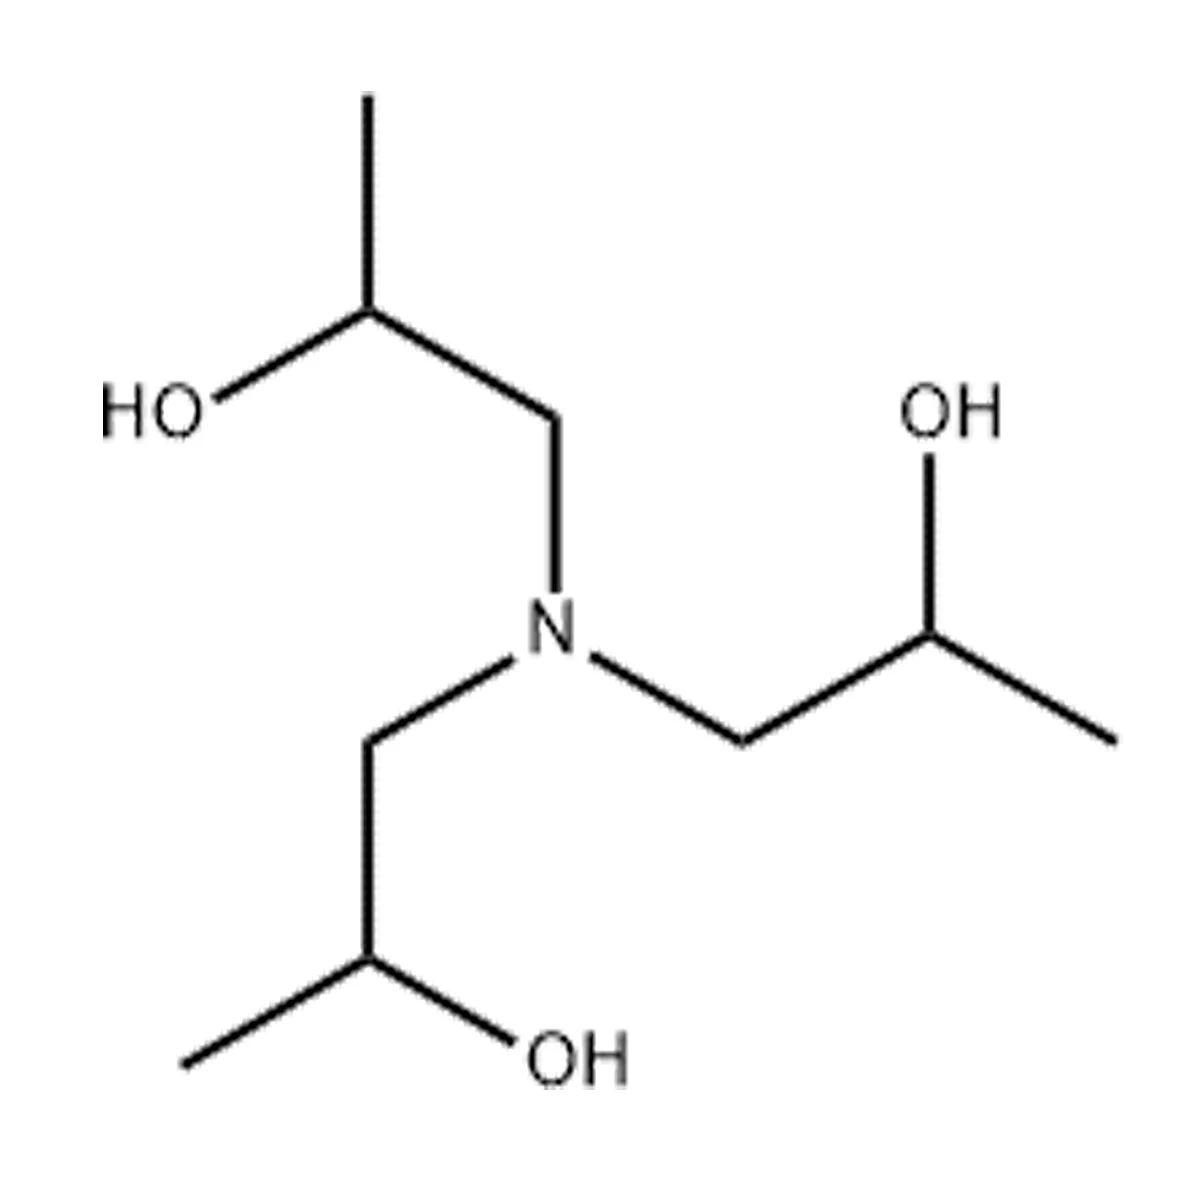 Triisopropanolamine